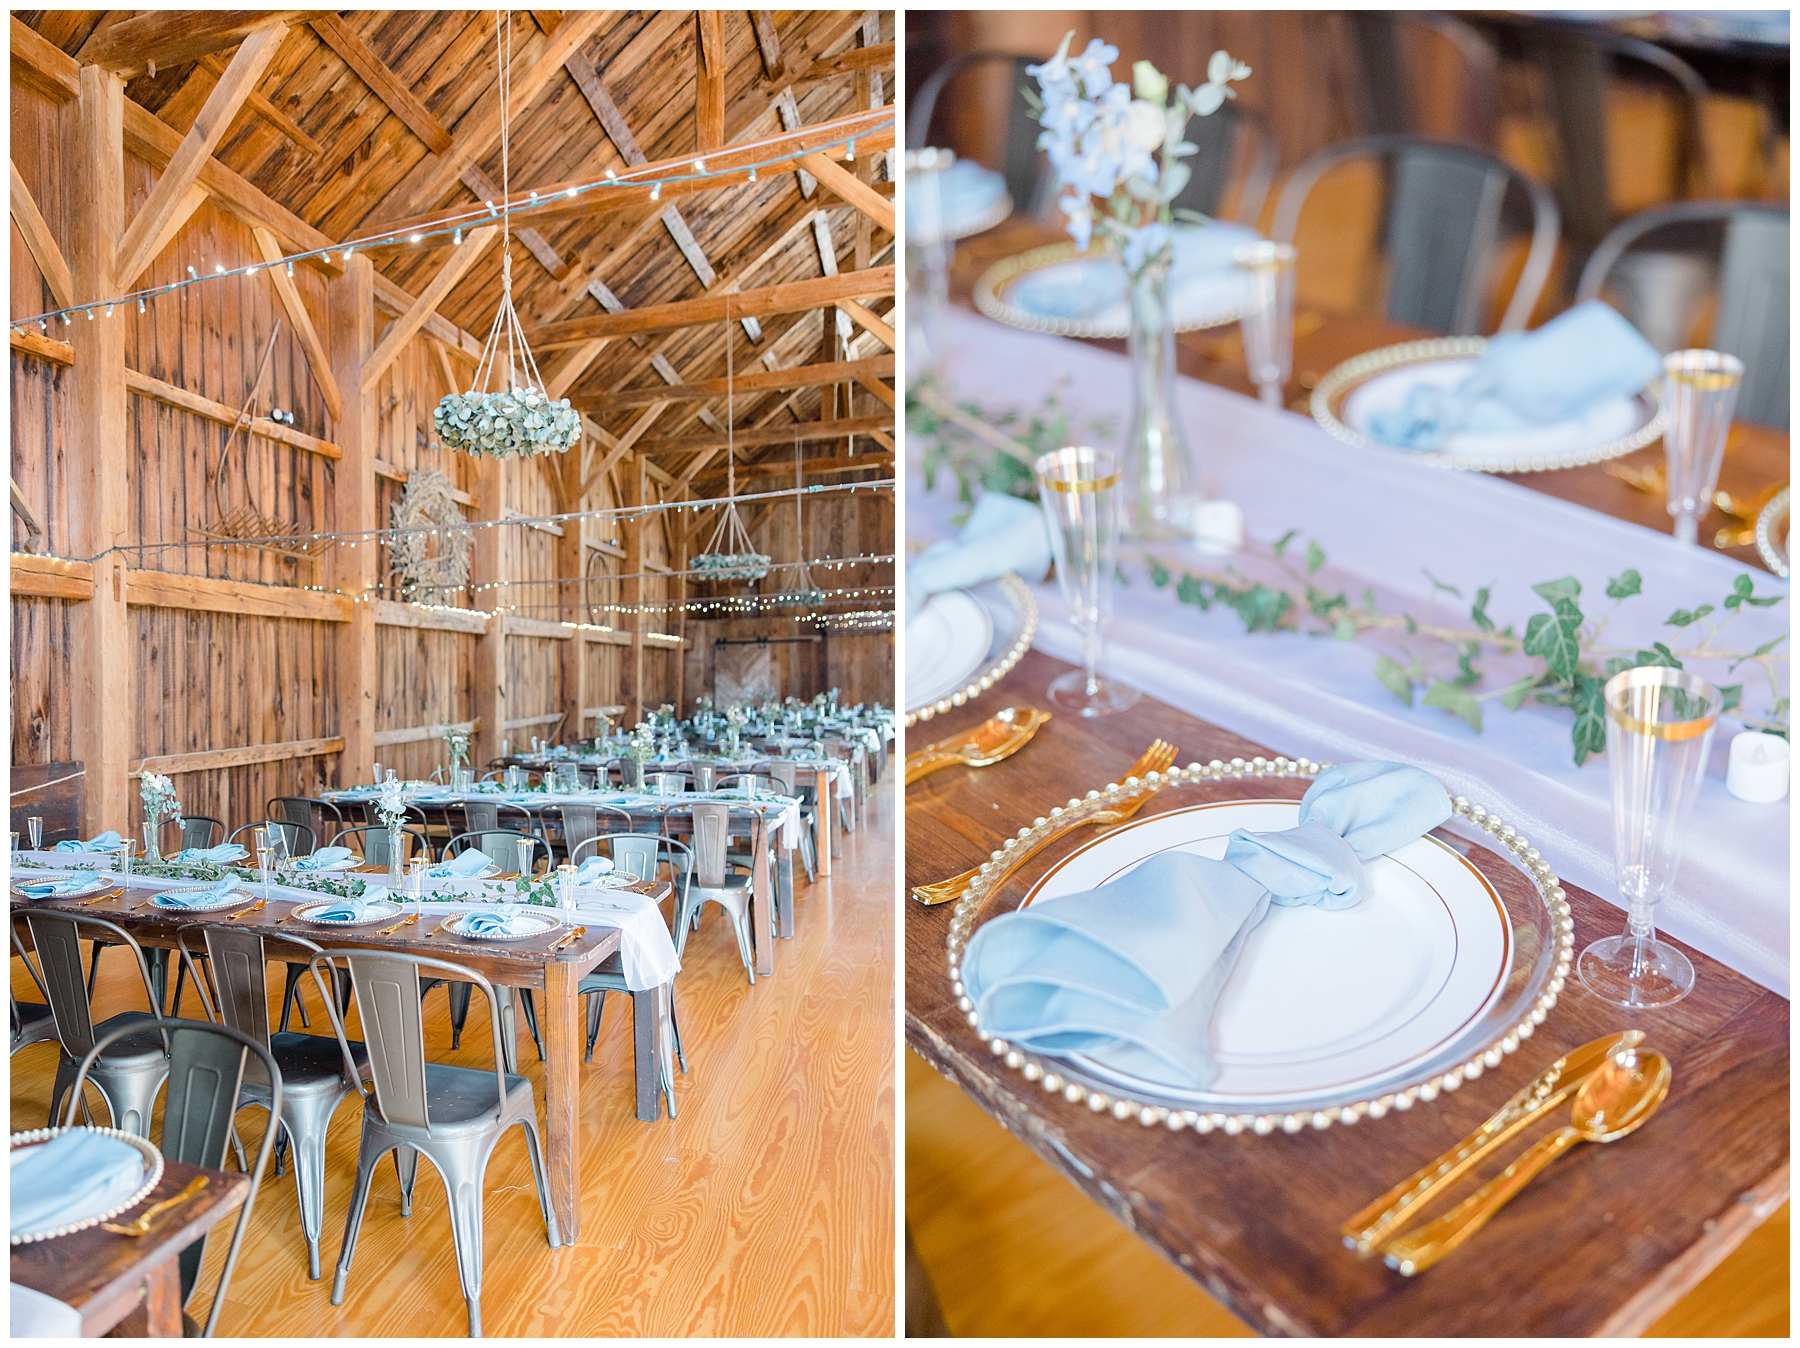 elegant and rustic wedding reception at The Barn at Powder Major's Farm